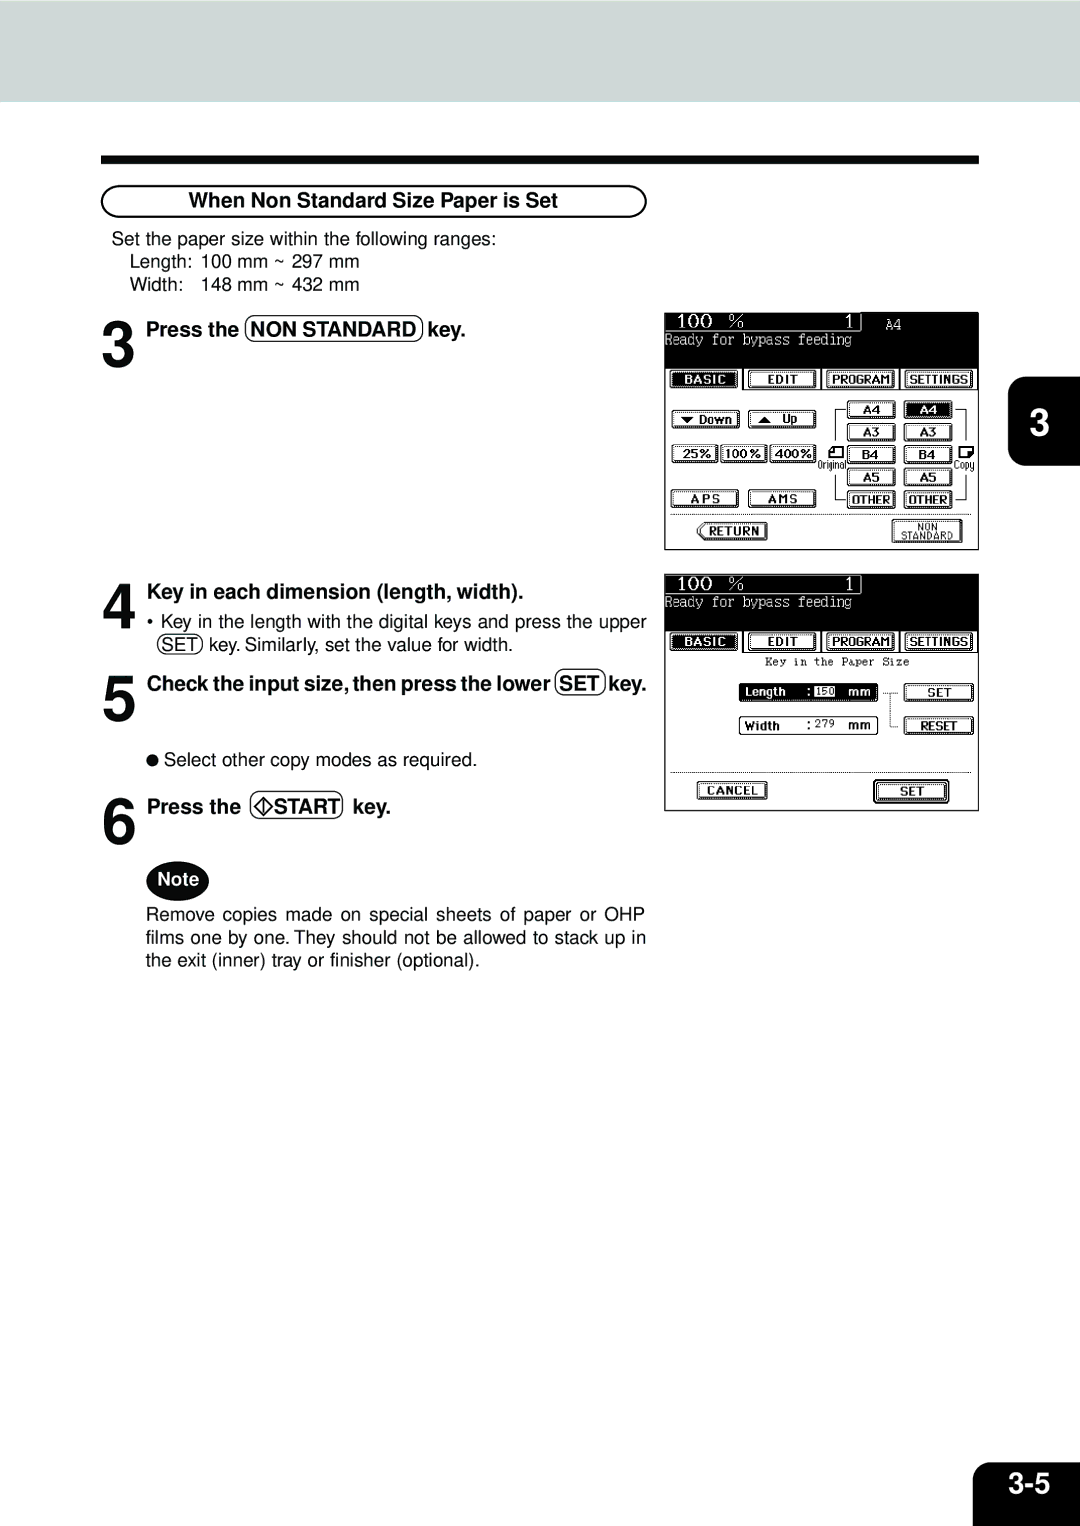 Toshiba e-STUDIO45, e-STUDIO35 When Non Standard Size Paper is Set, Check the input size, then press the lower SET key 